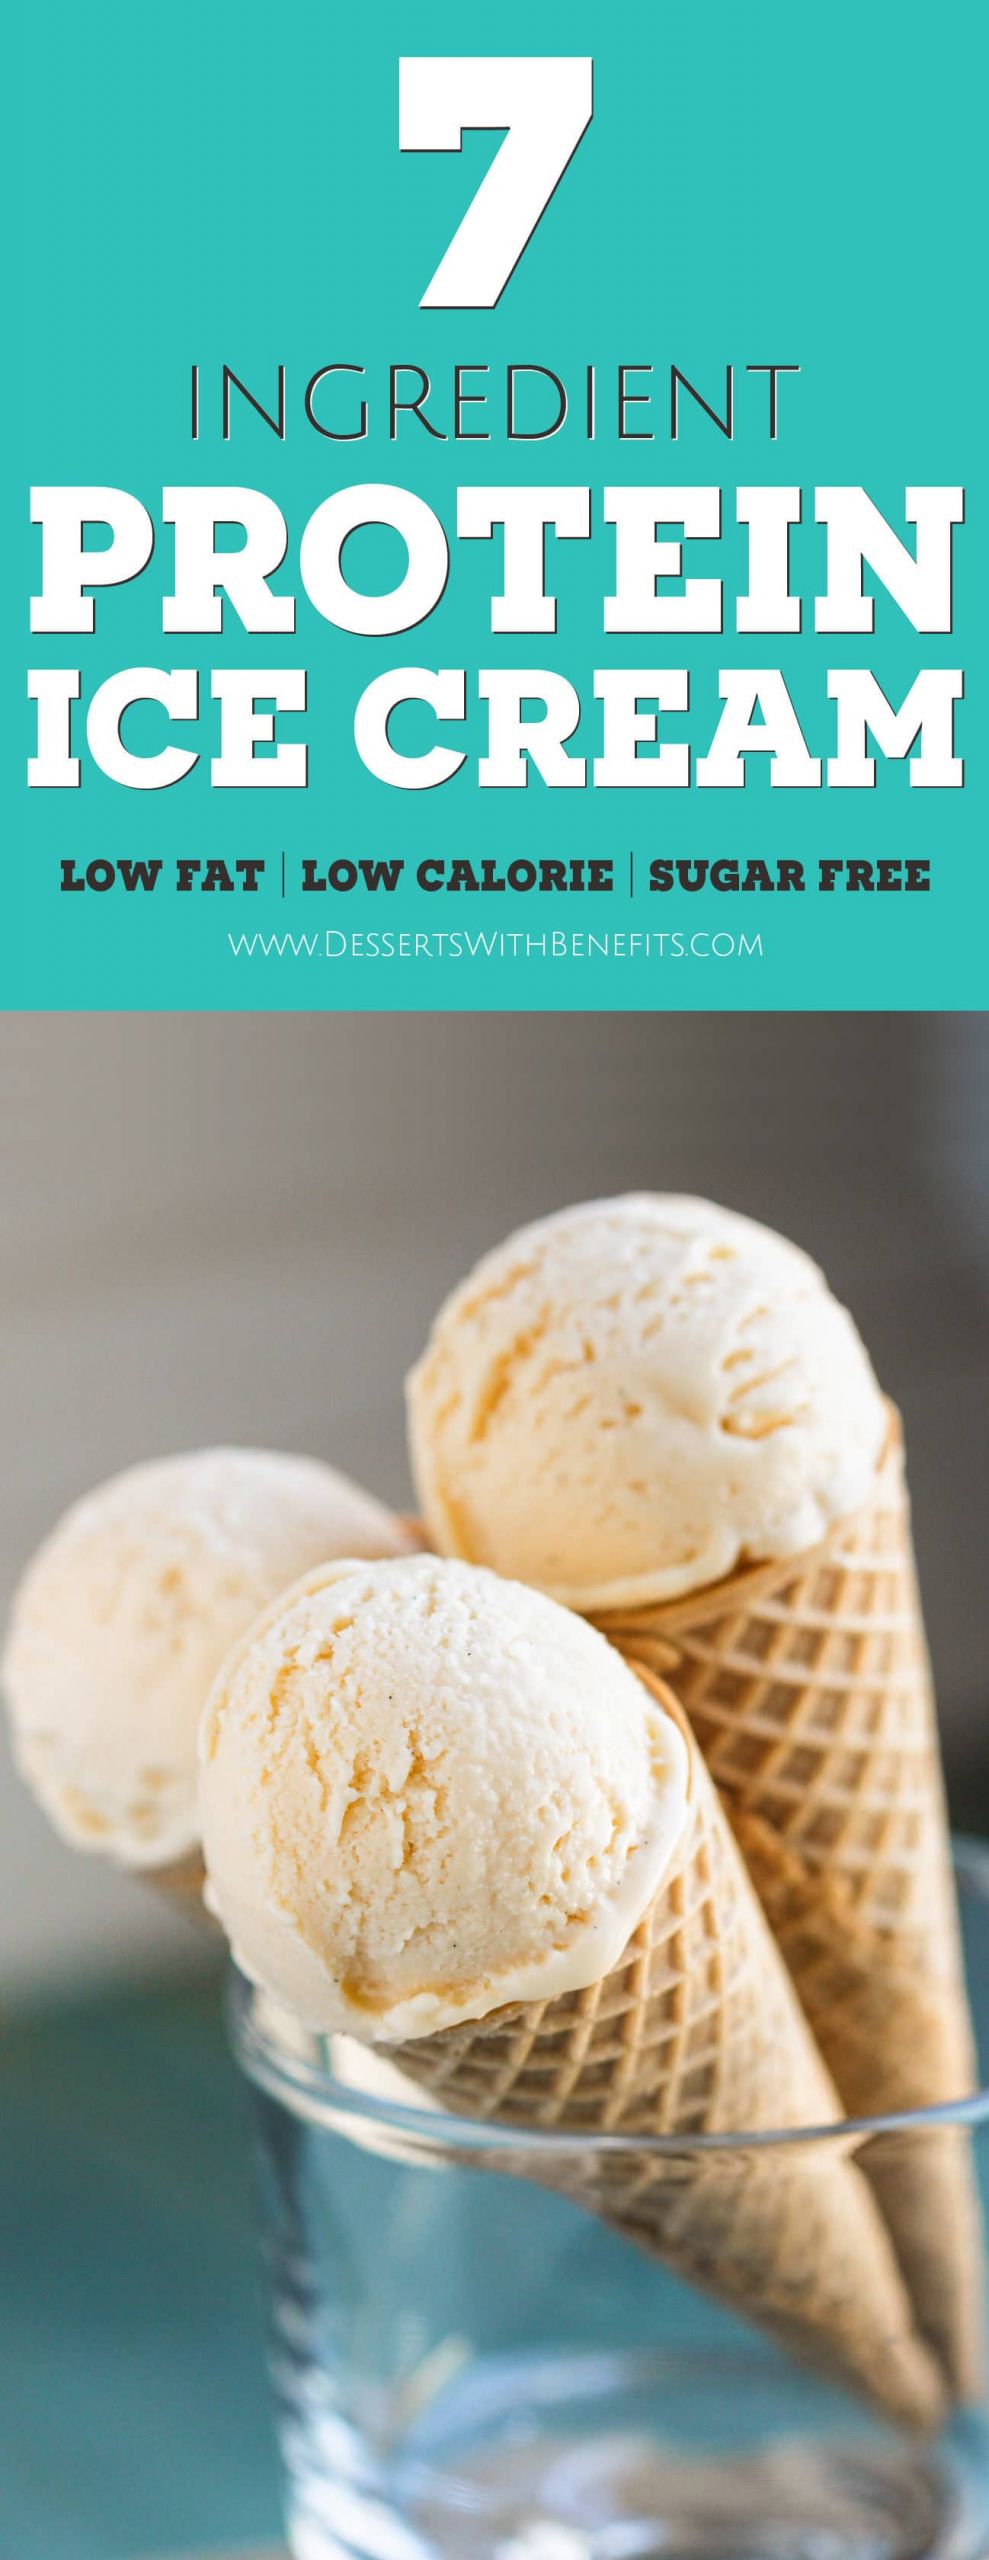 Low Calorie Ice Cream Recipes For Ice Cream Maker
 Healthy Vanilla Protein Ice Cream Recipe